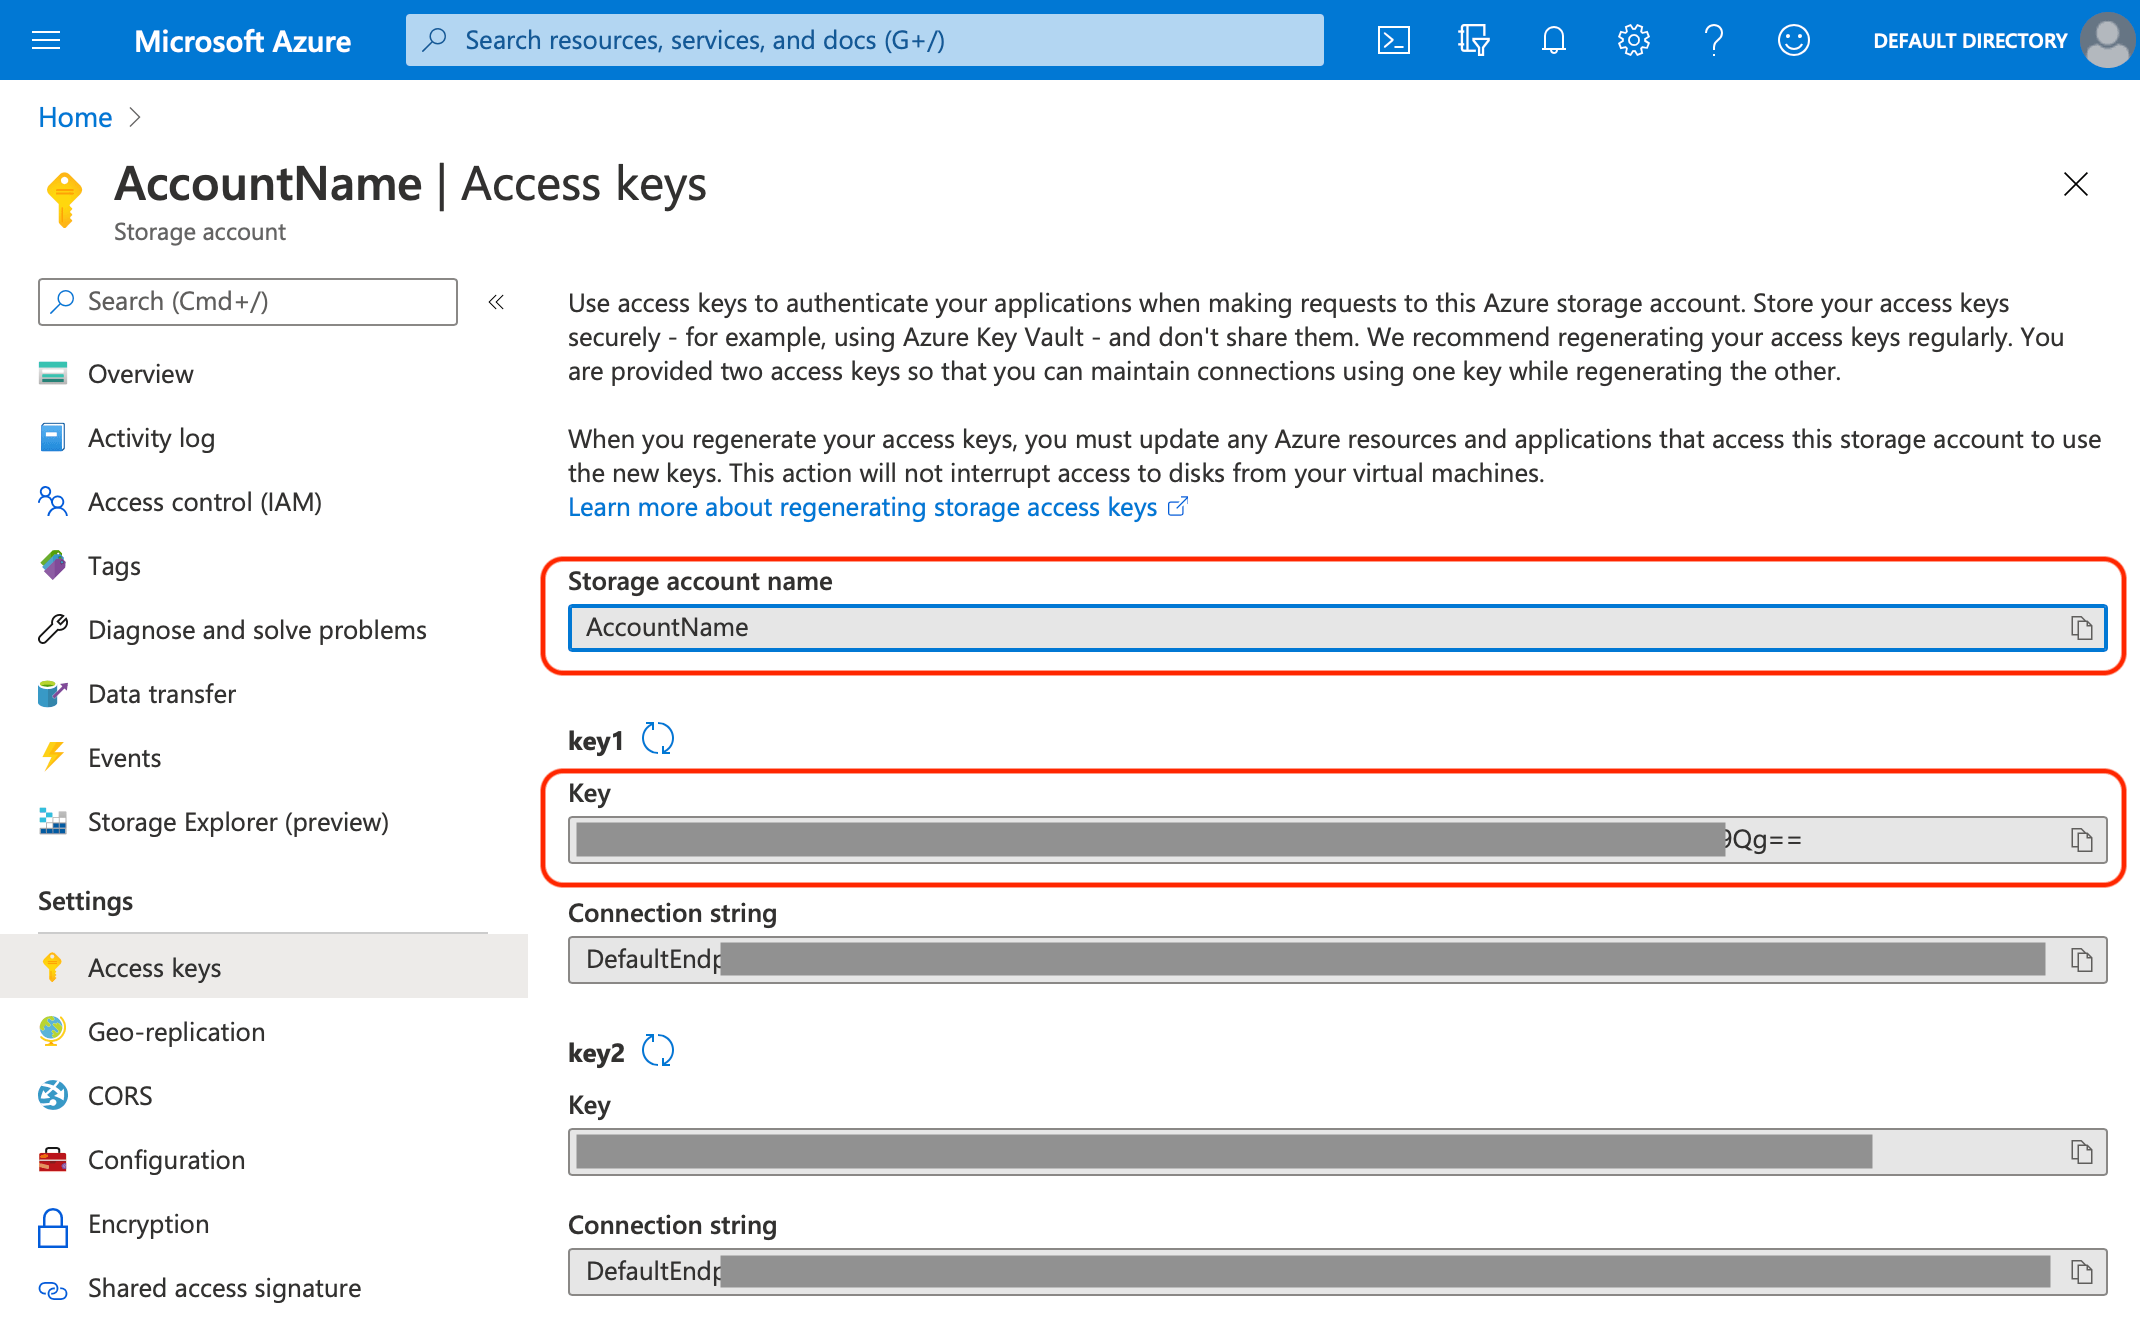 Microsoft Azure Storage Access Keys